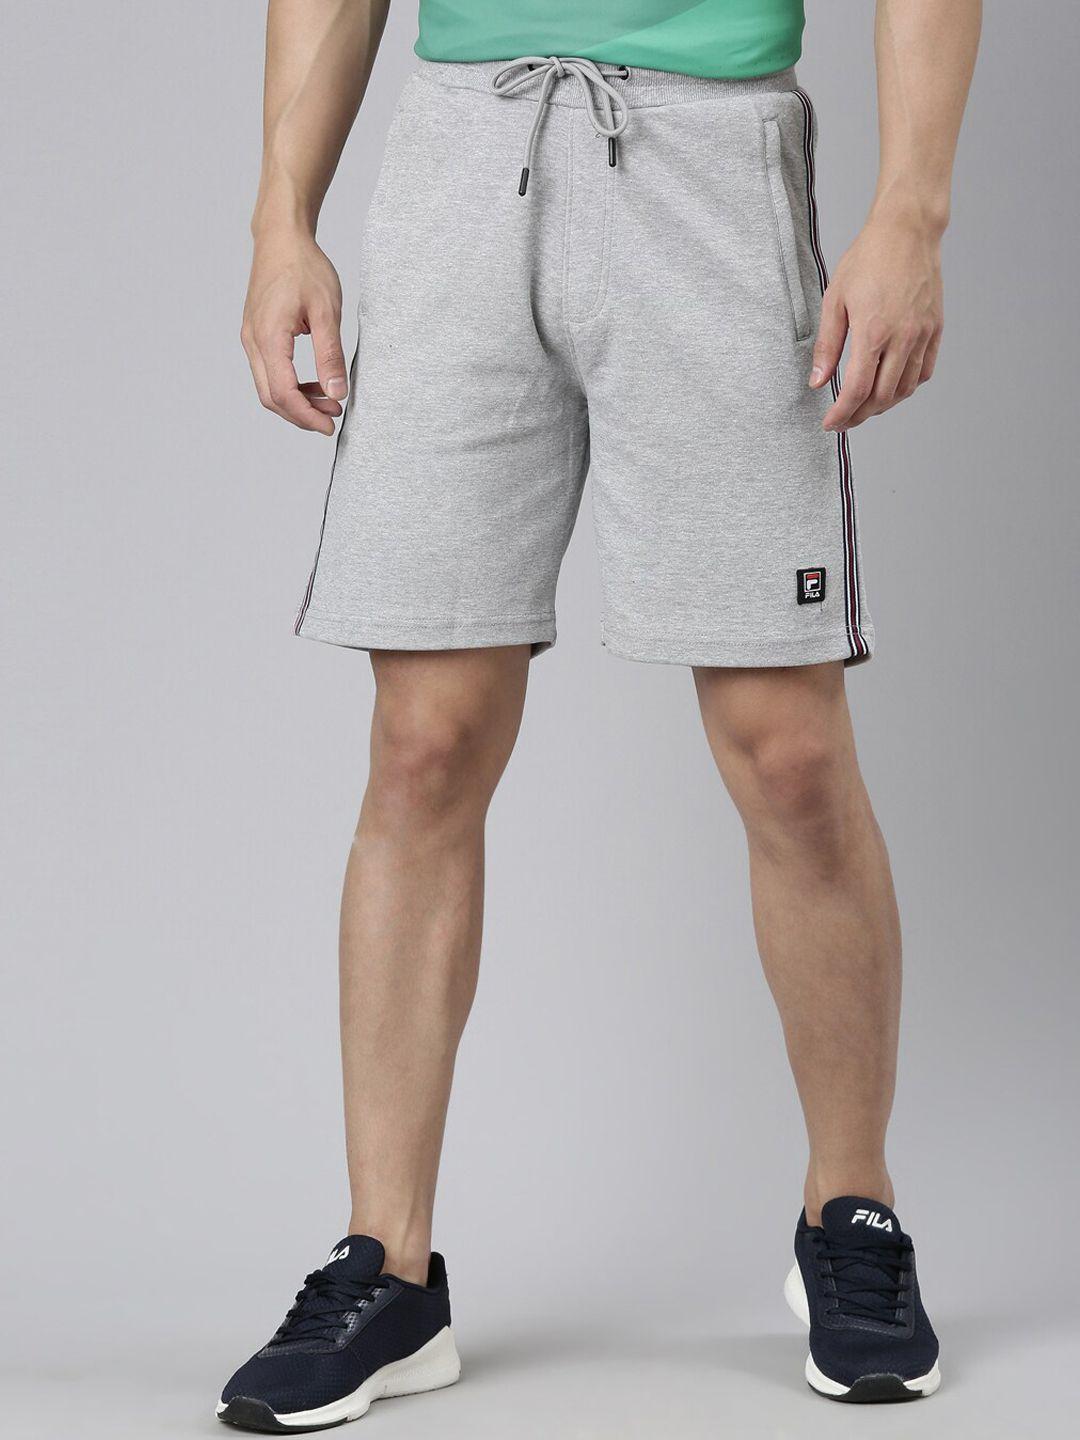 fila-men-grey-cotton-sports-shorts